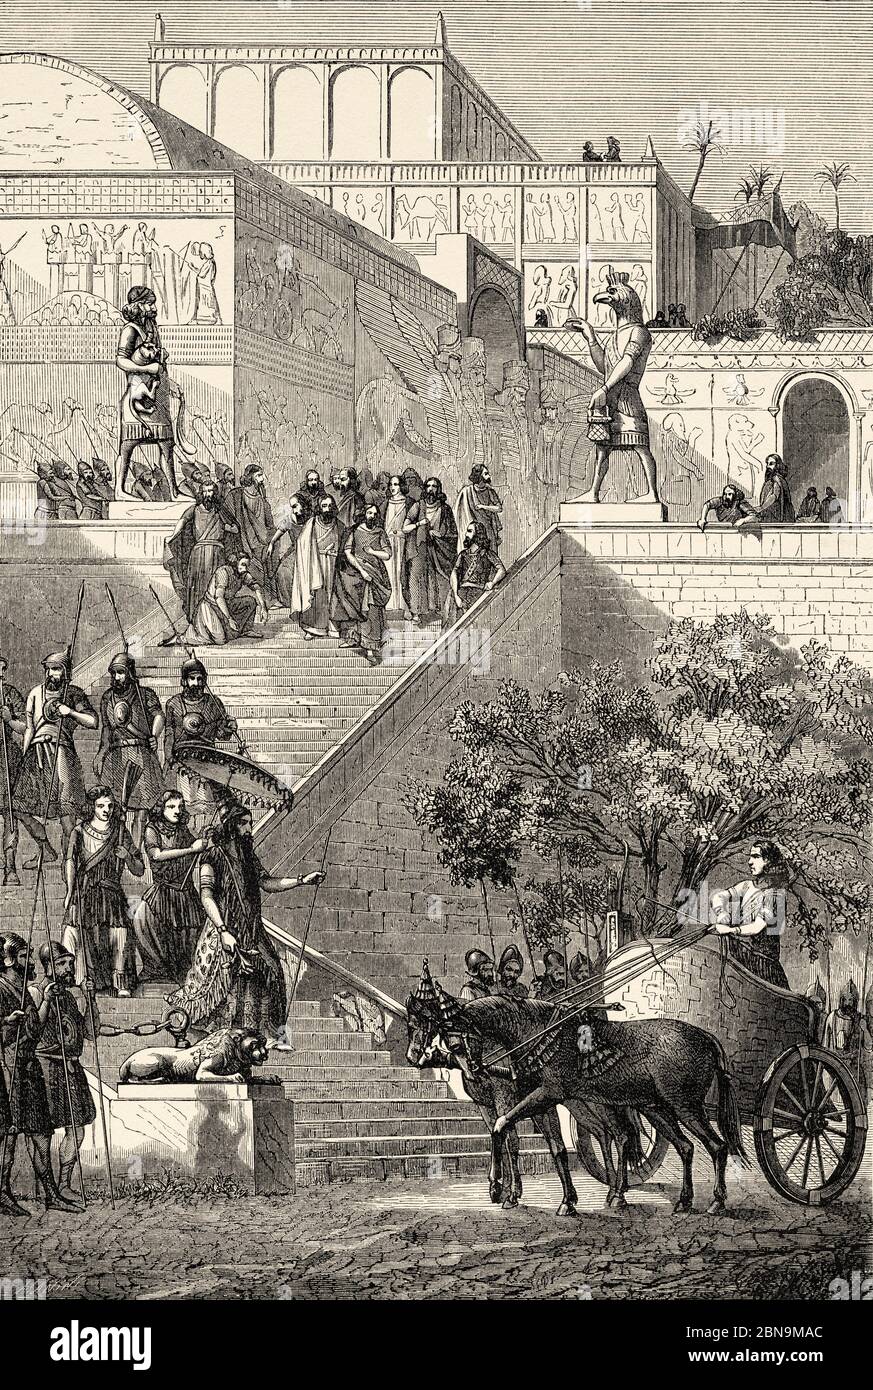 The Assyrian palace of Kouyunjik, being restored. Northern Iraq. Old 19th century engraved illustration, Le Tour du Monde 1863 Stock Photo